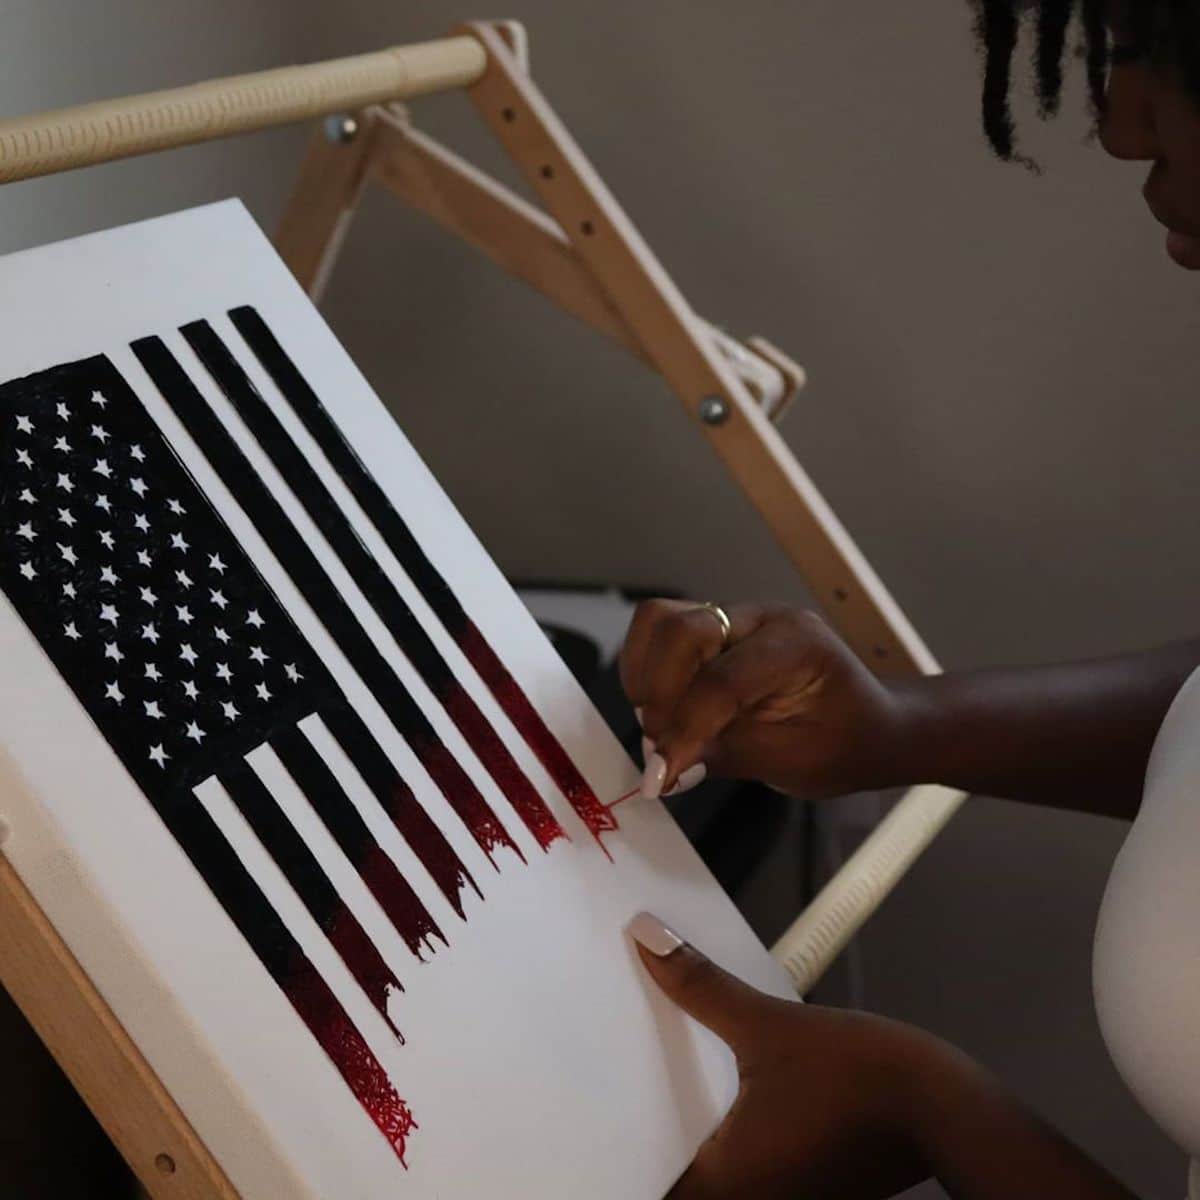 Nneka Jones embroiders the American flag